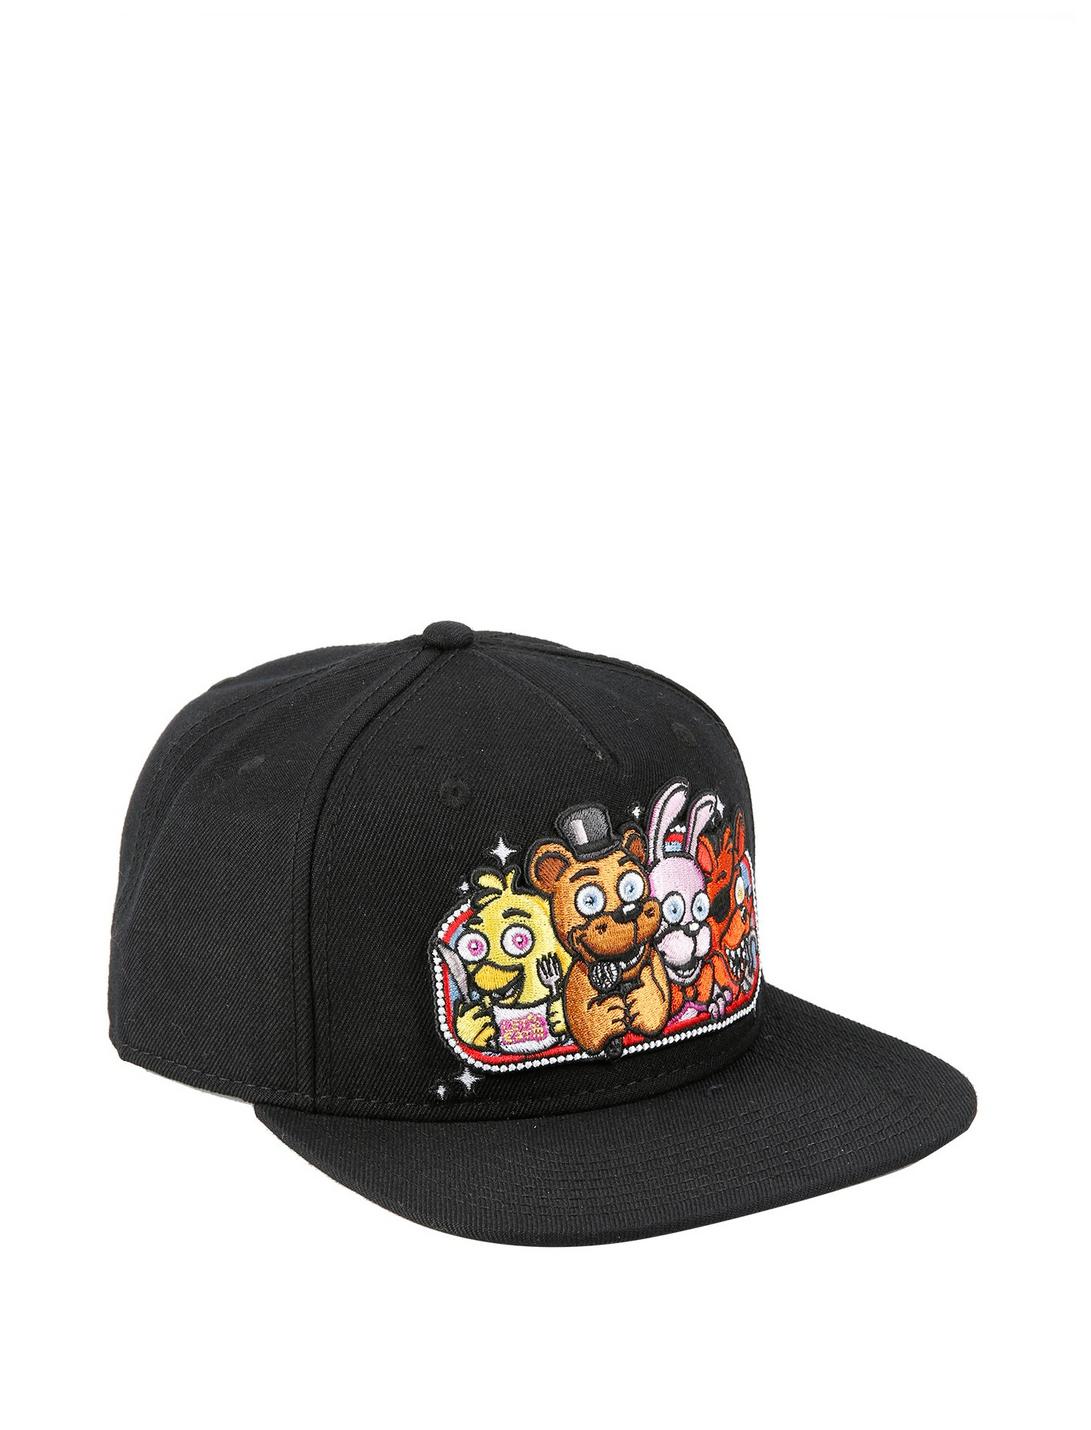 Five Nights At Freddy's Group Lineup Snapback Hat, , hi-res